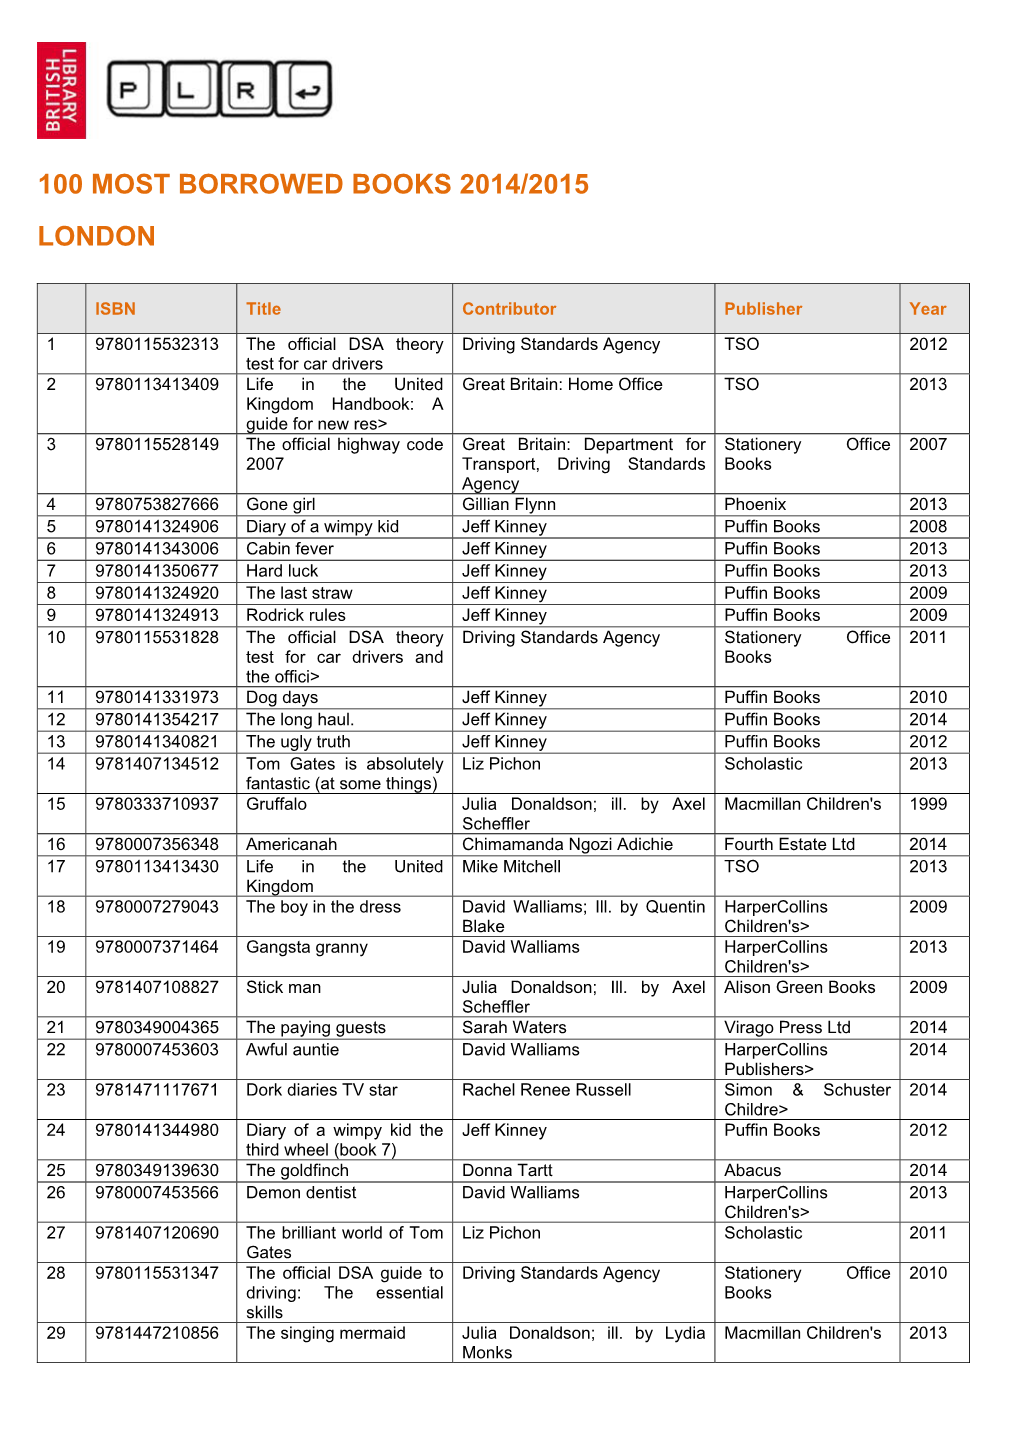 100 Most Borrowed Books 2014/2015 London